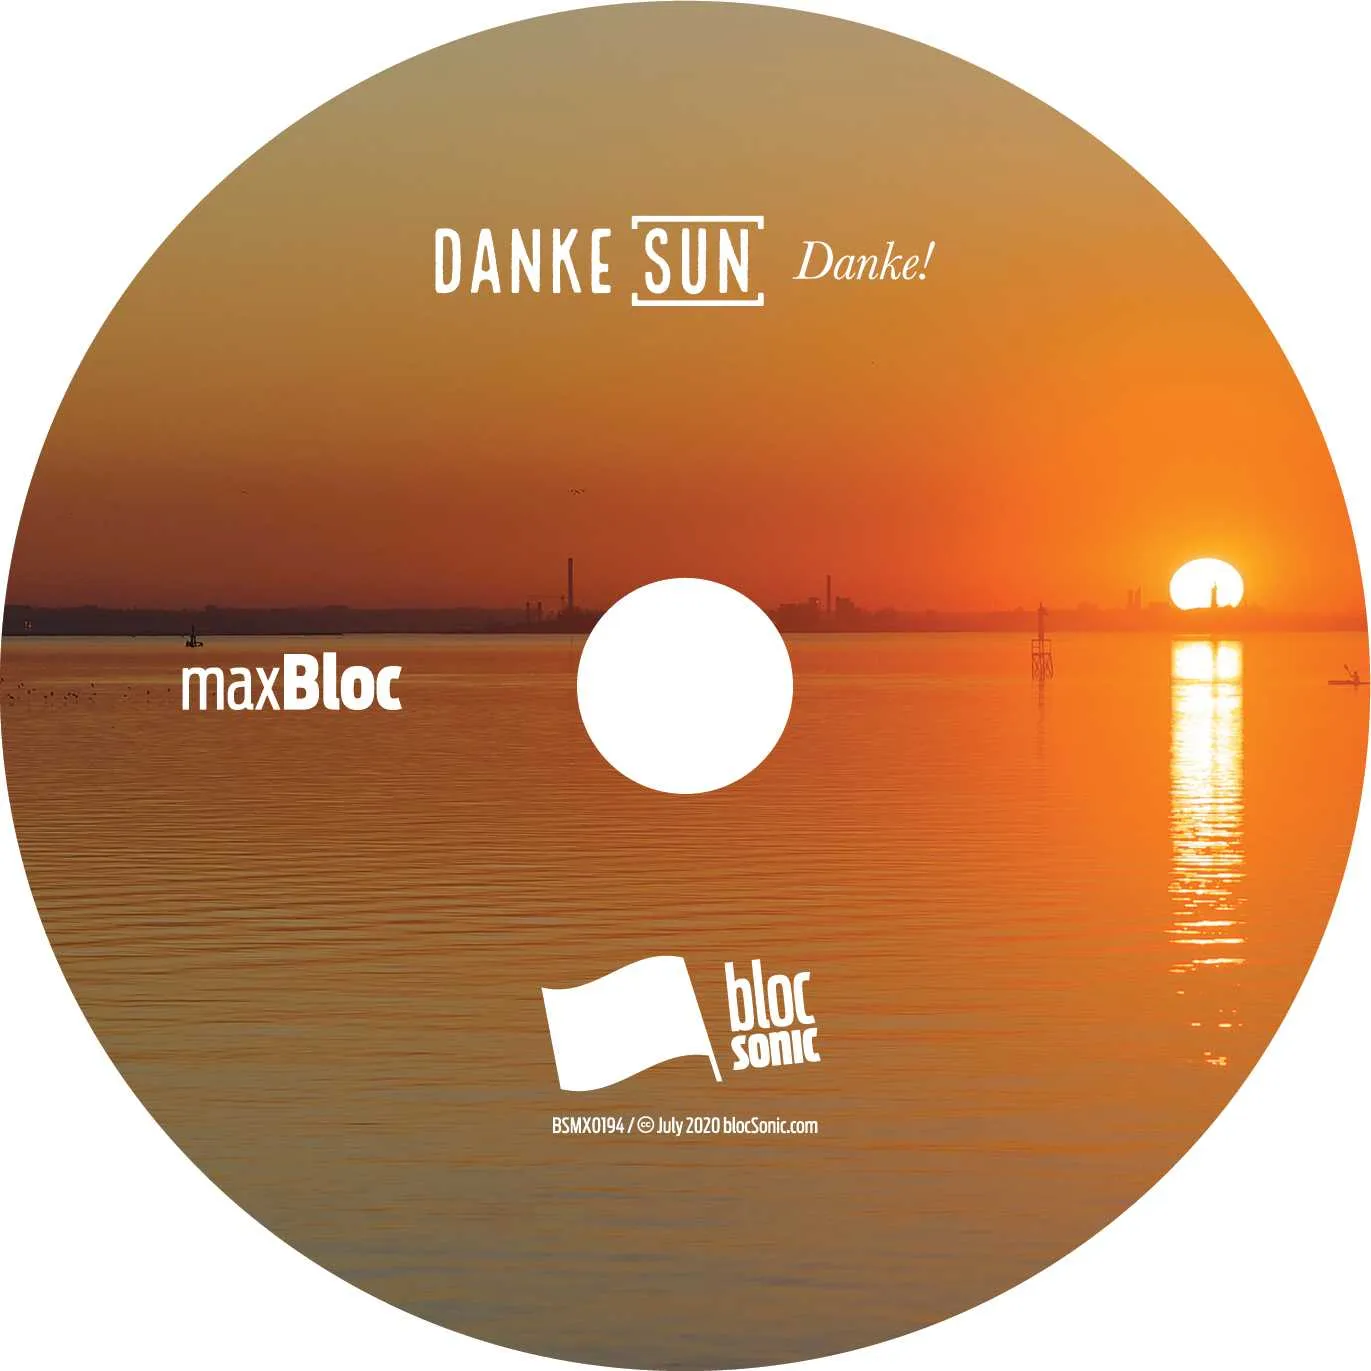 Album disc for “Danke!” by Danke Sun